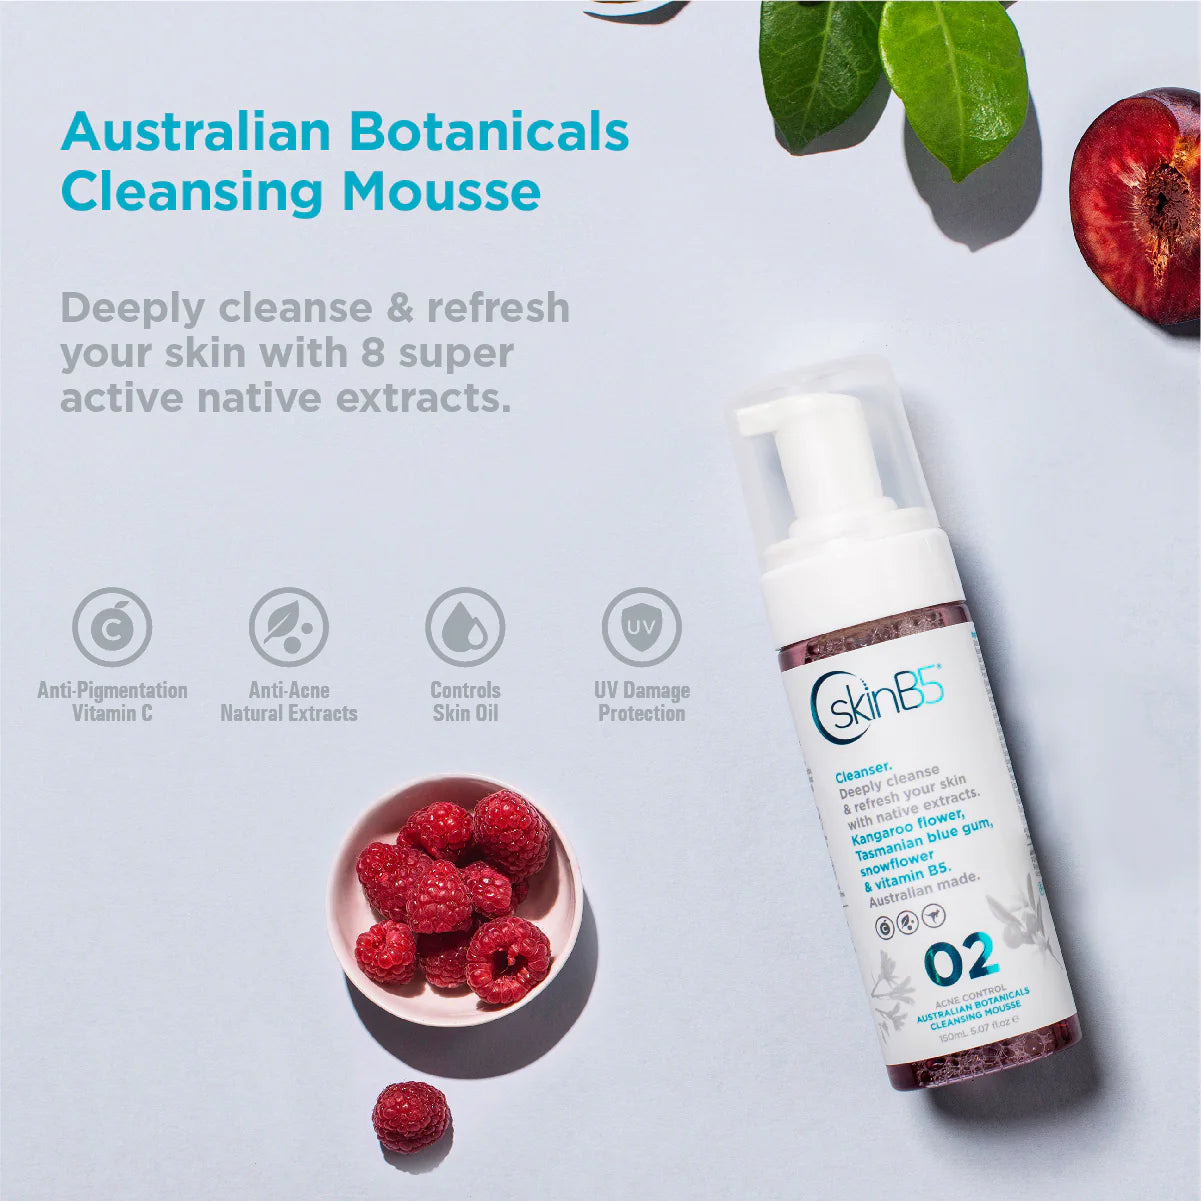 SkinB5 Australian Botanicals Cleansing Mousse  info